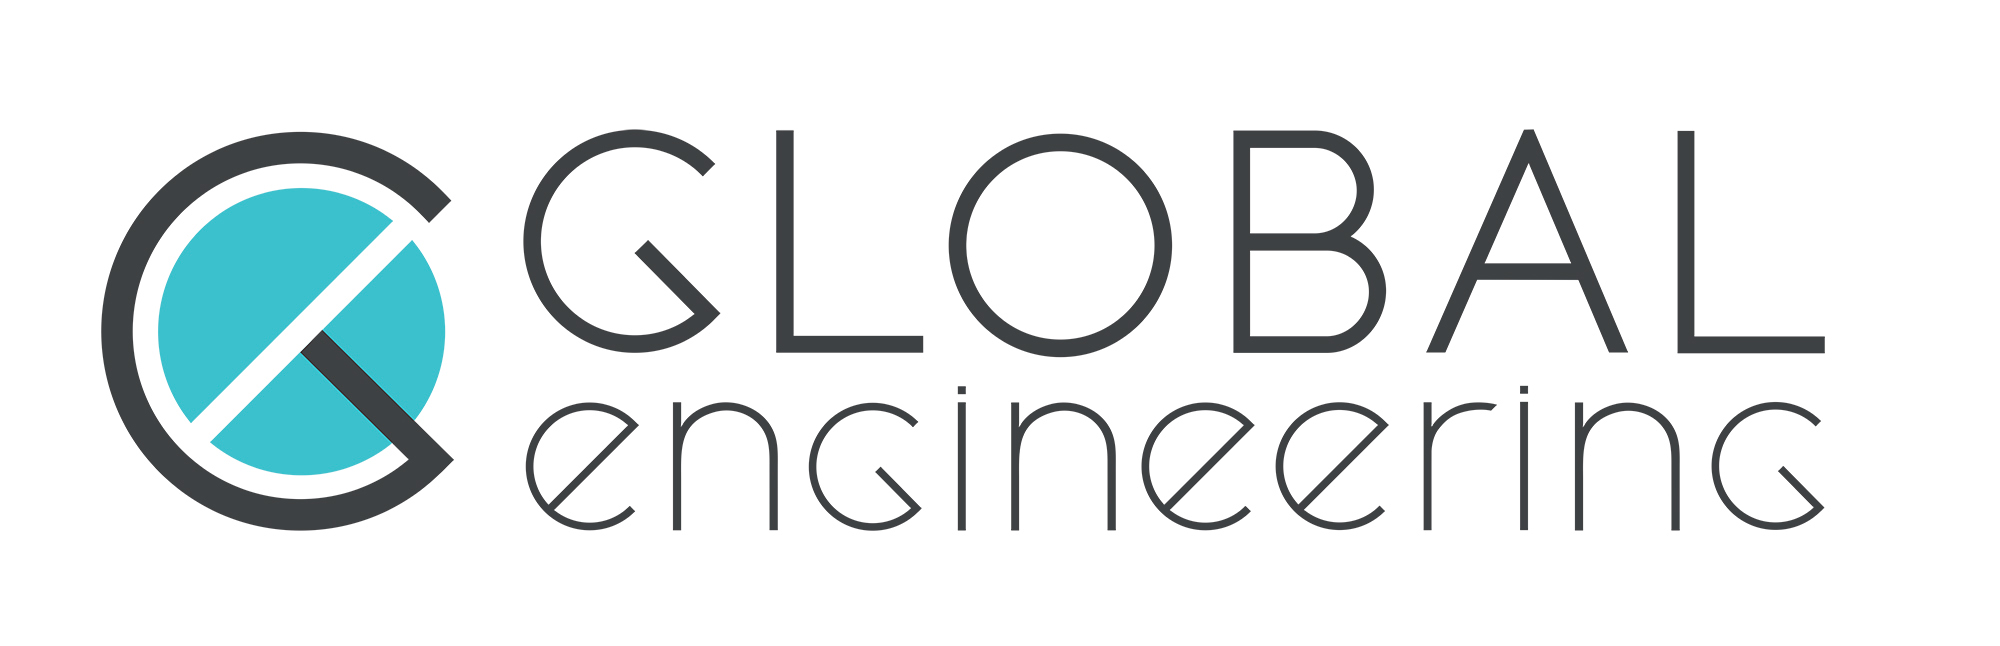 Explorer globe engineering. Global логотип. Глобал ИНЖИНИРИНГ логотип. Meka Global логотип. Global radiatori логотип.